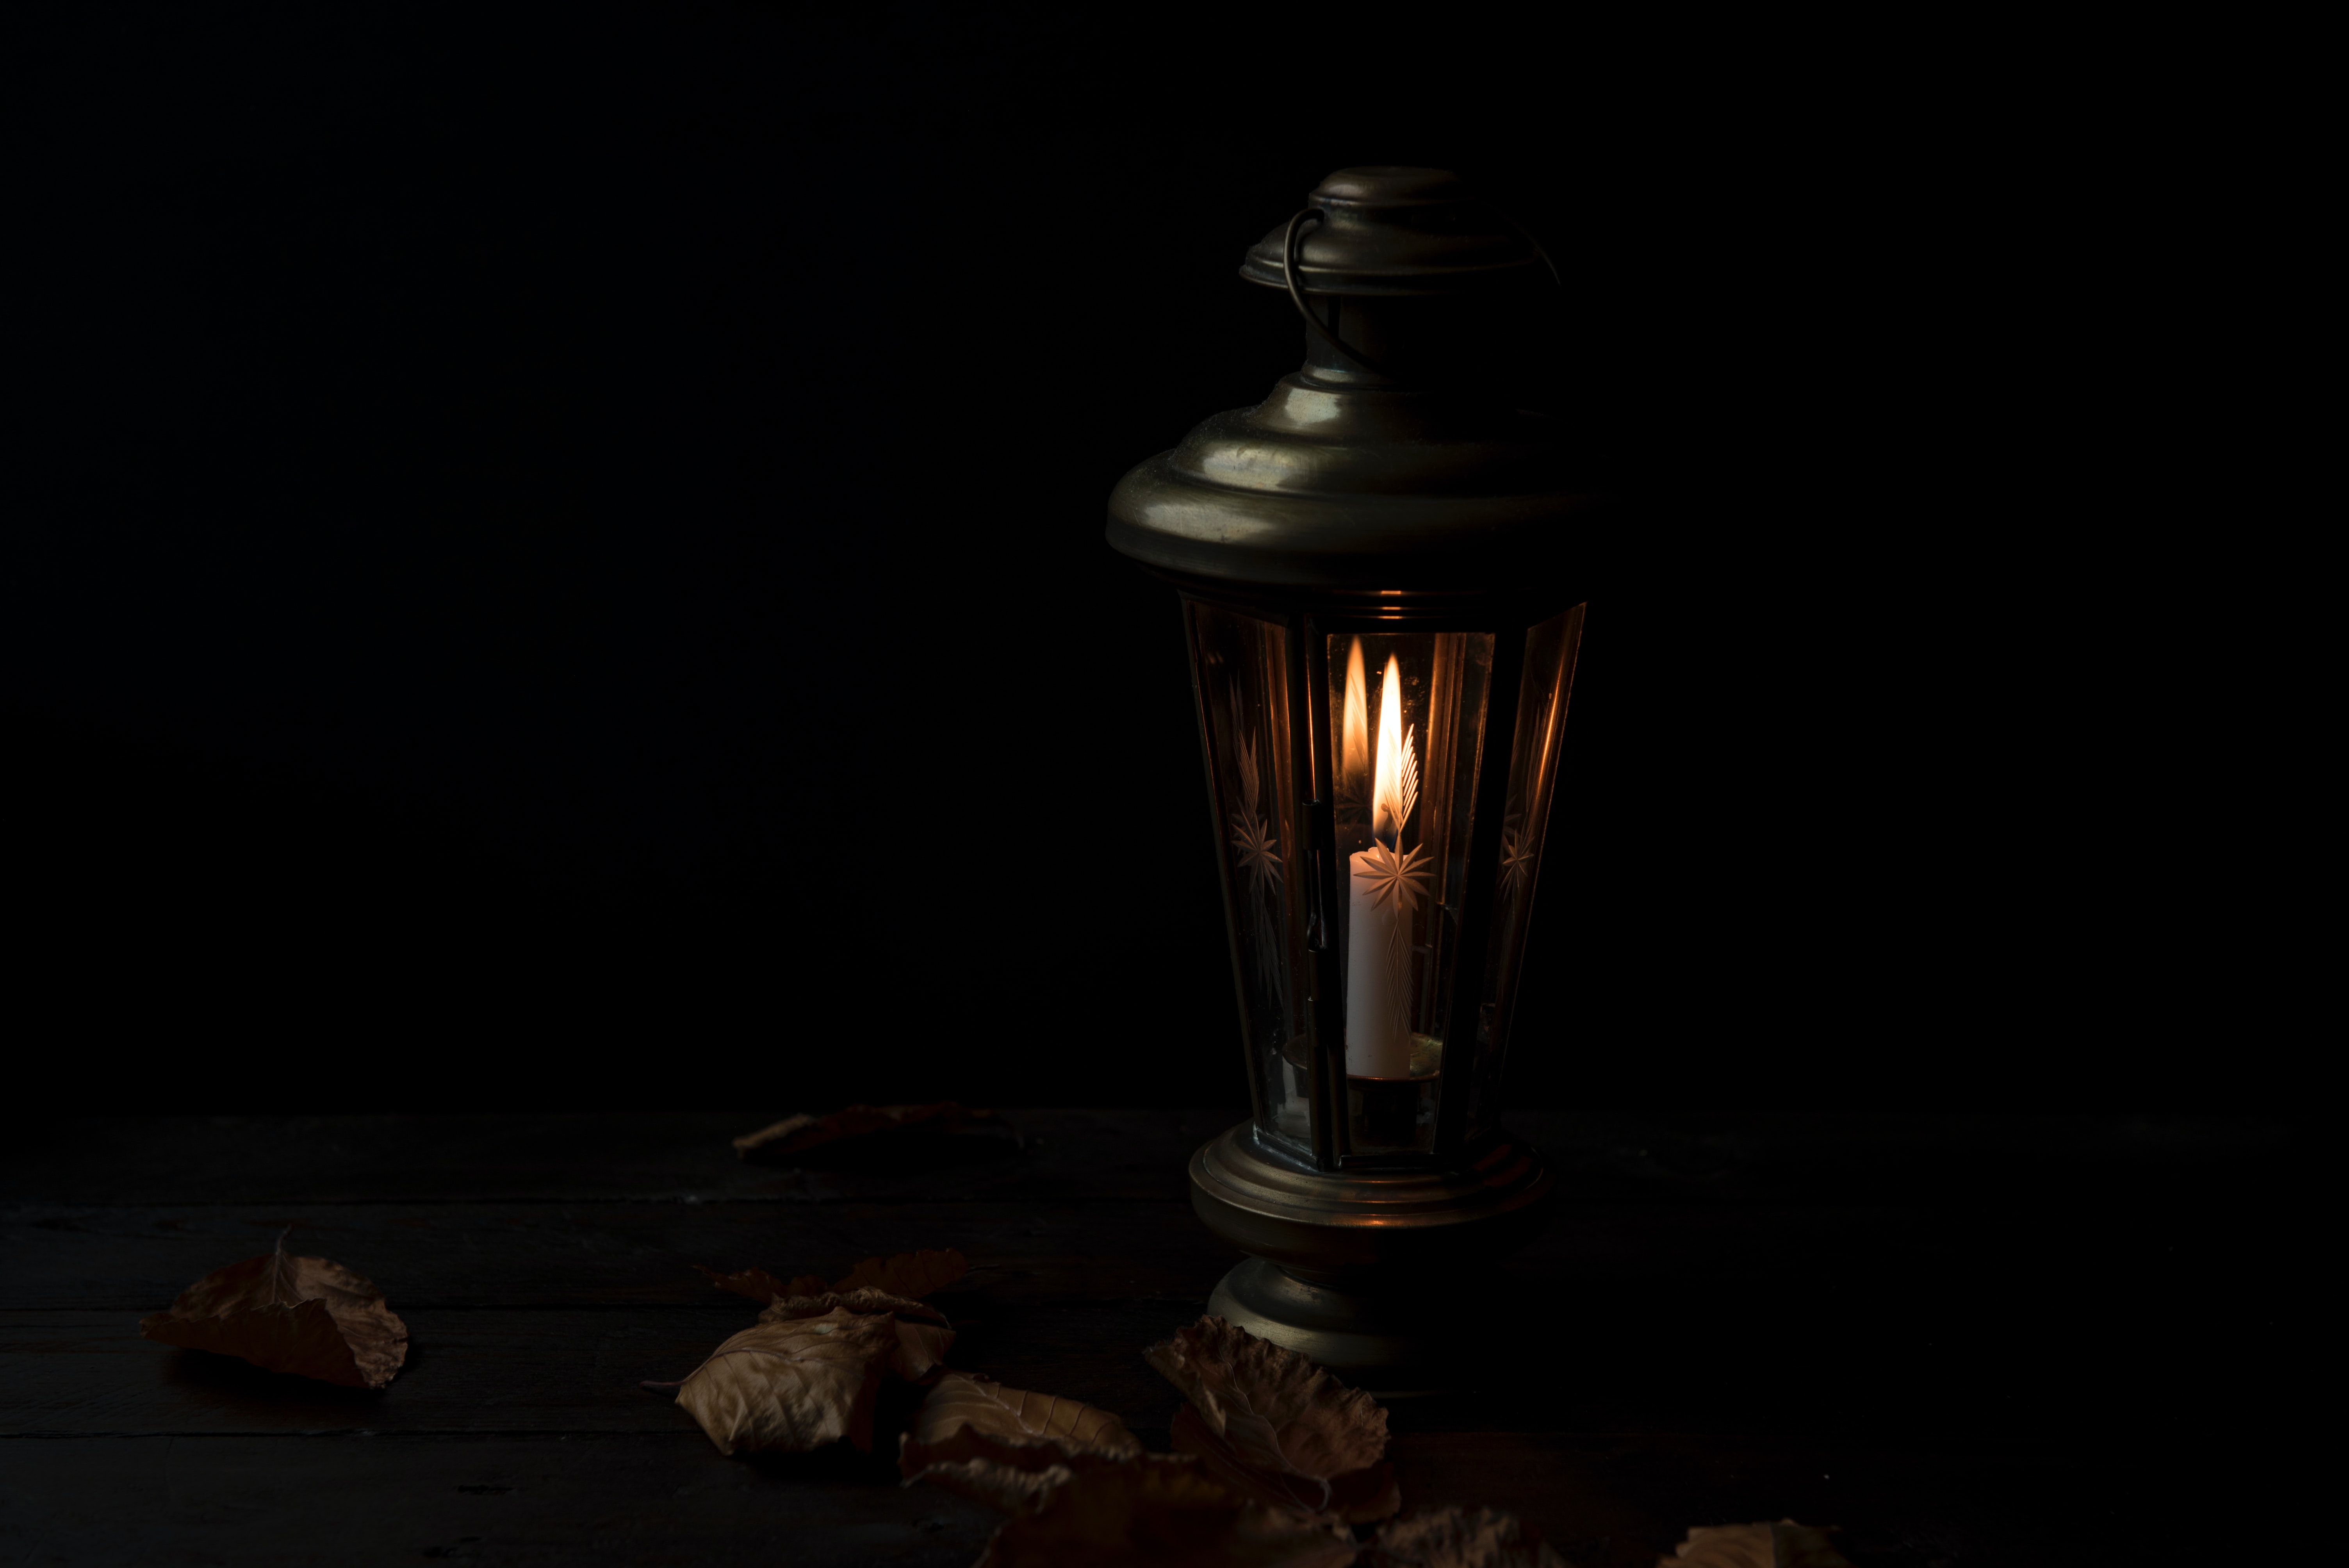 dimly lit lantern in darkness